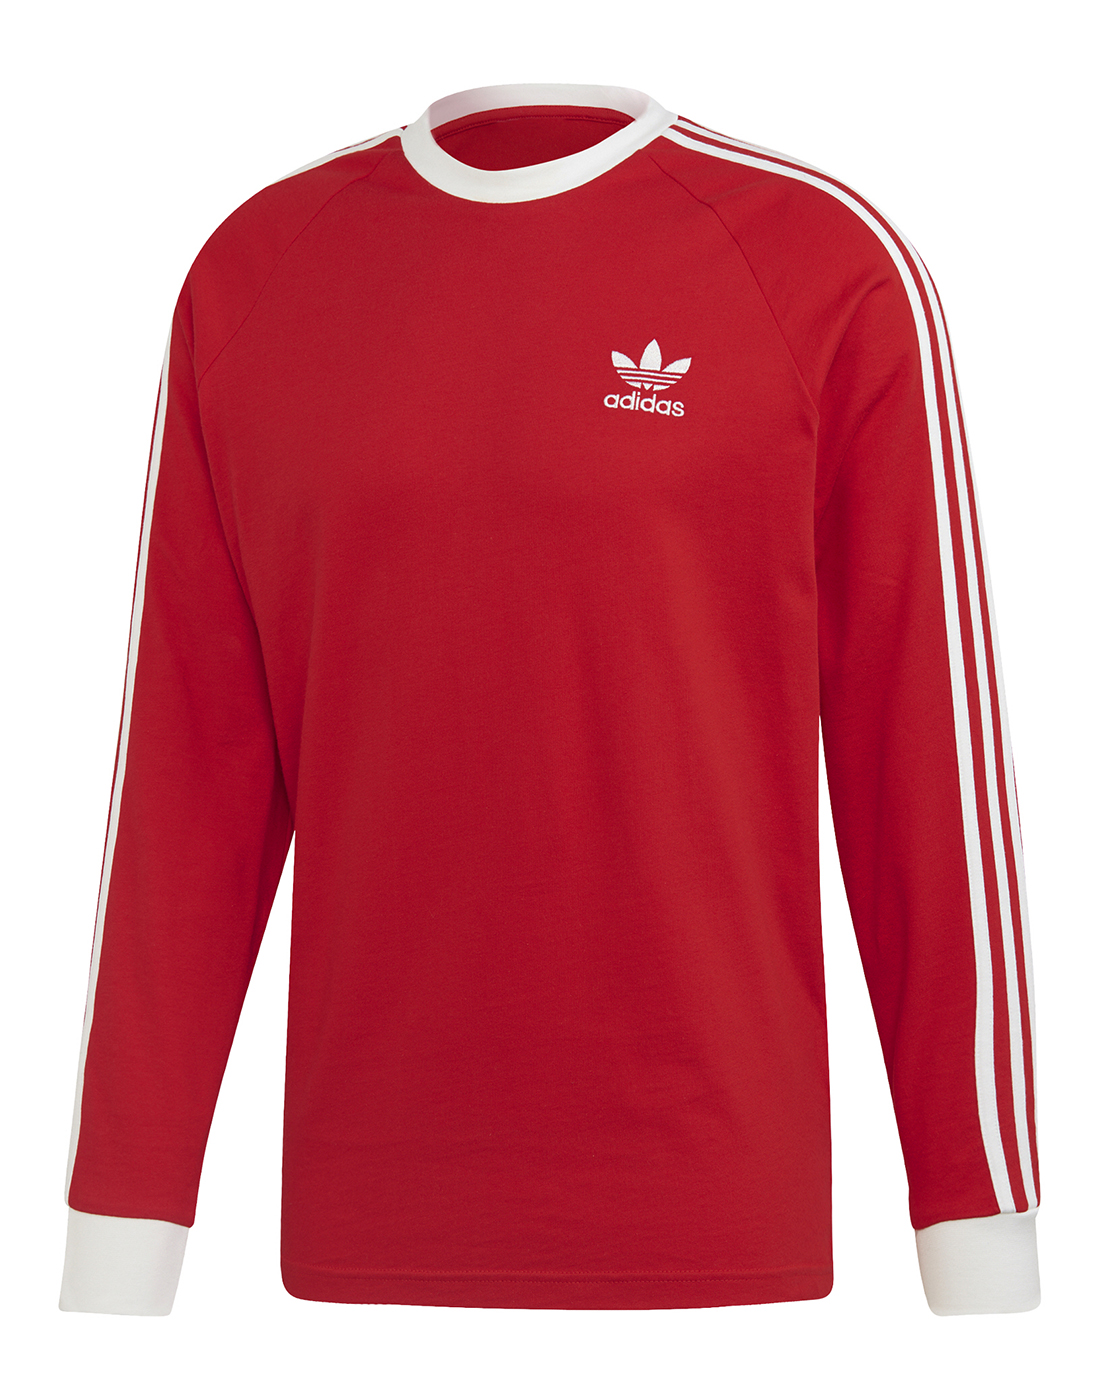 adidas Originals Mens 3-Stripes Long Sleeve T-Shirt - Red | Life Style ...